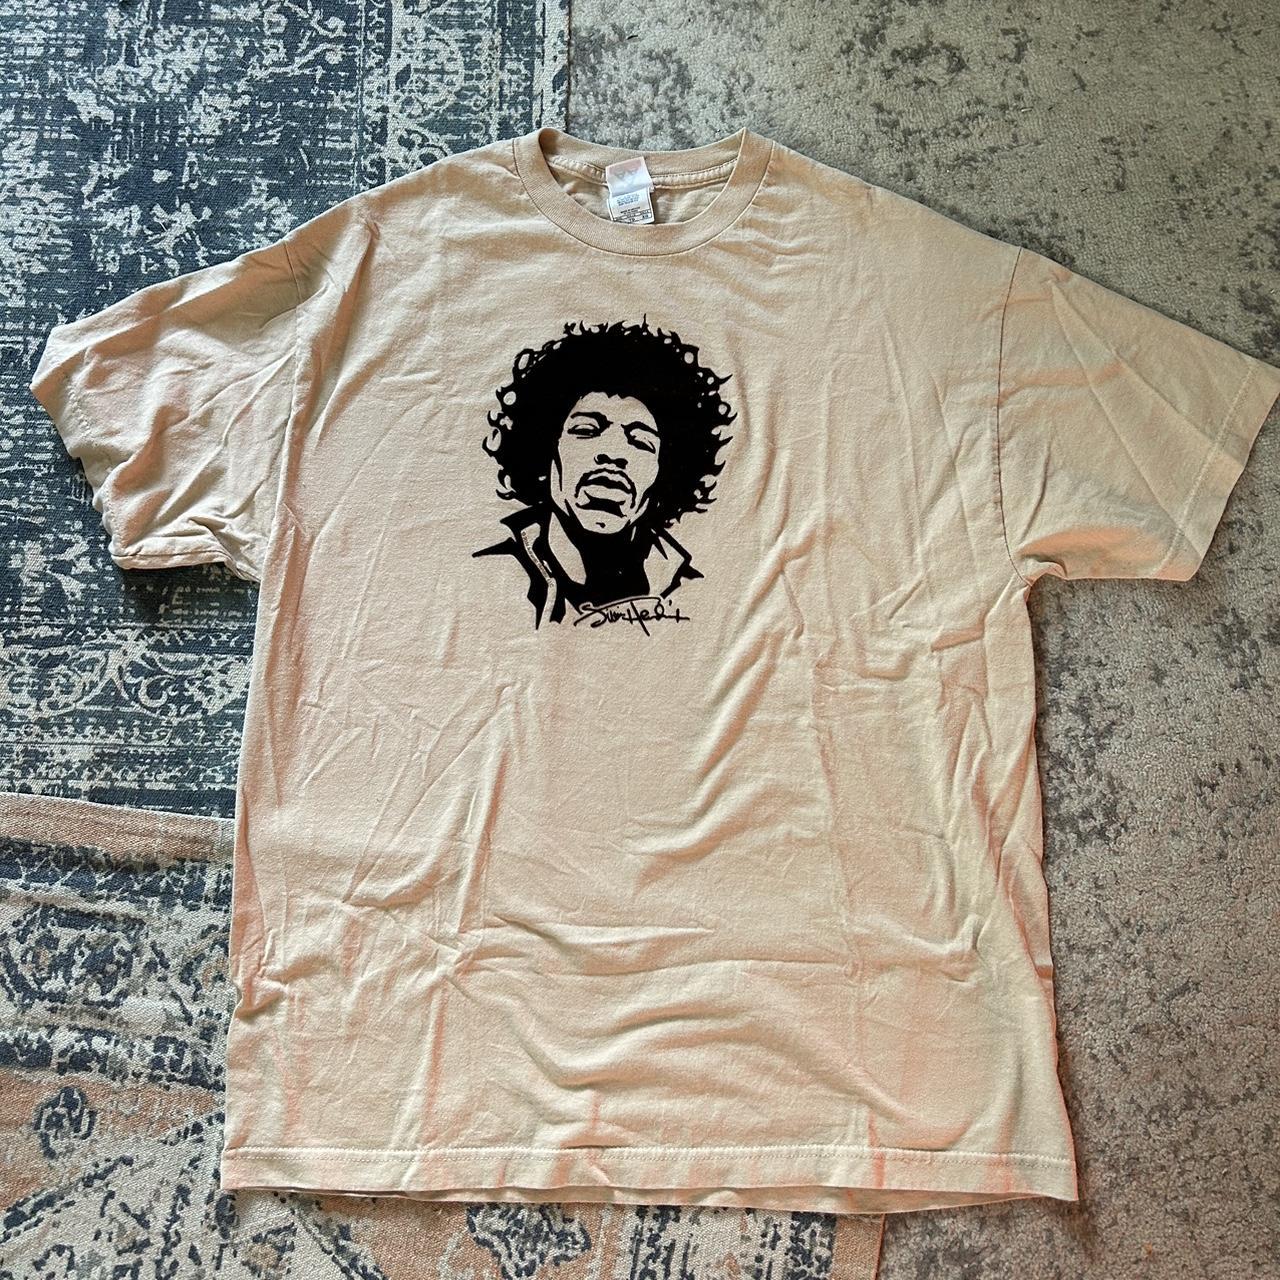 Jimi Hendrix Tan Felt Print t-shirt Photo tee on a... - Depop